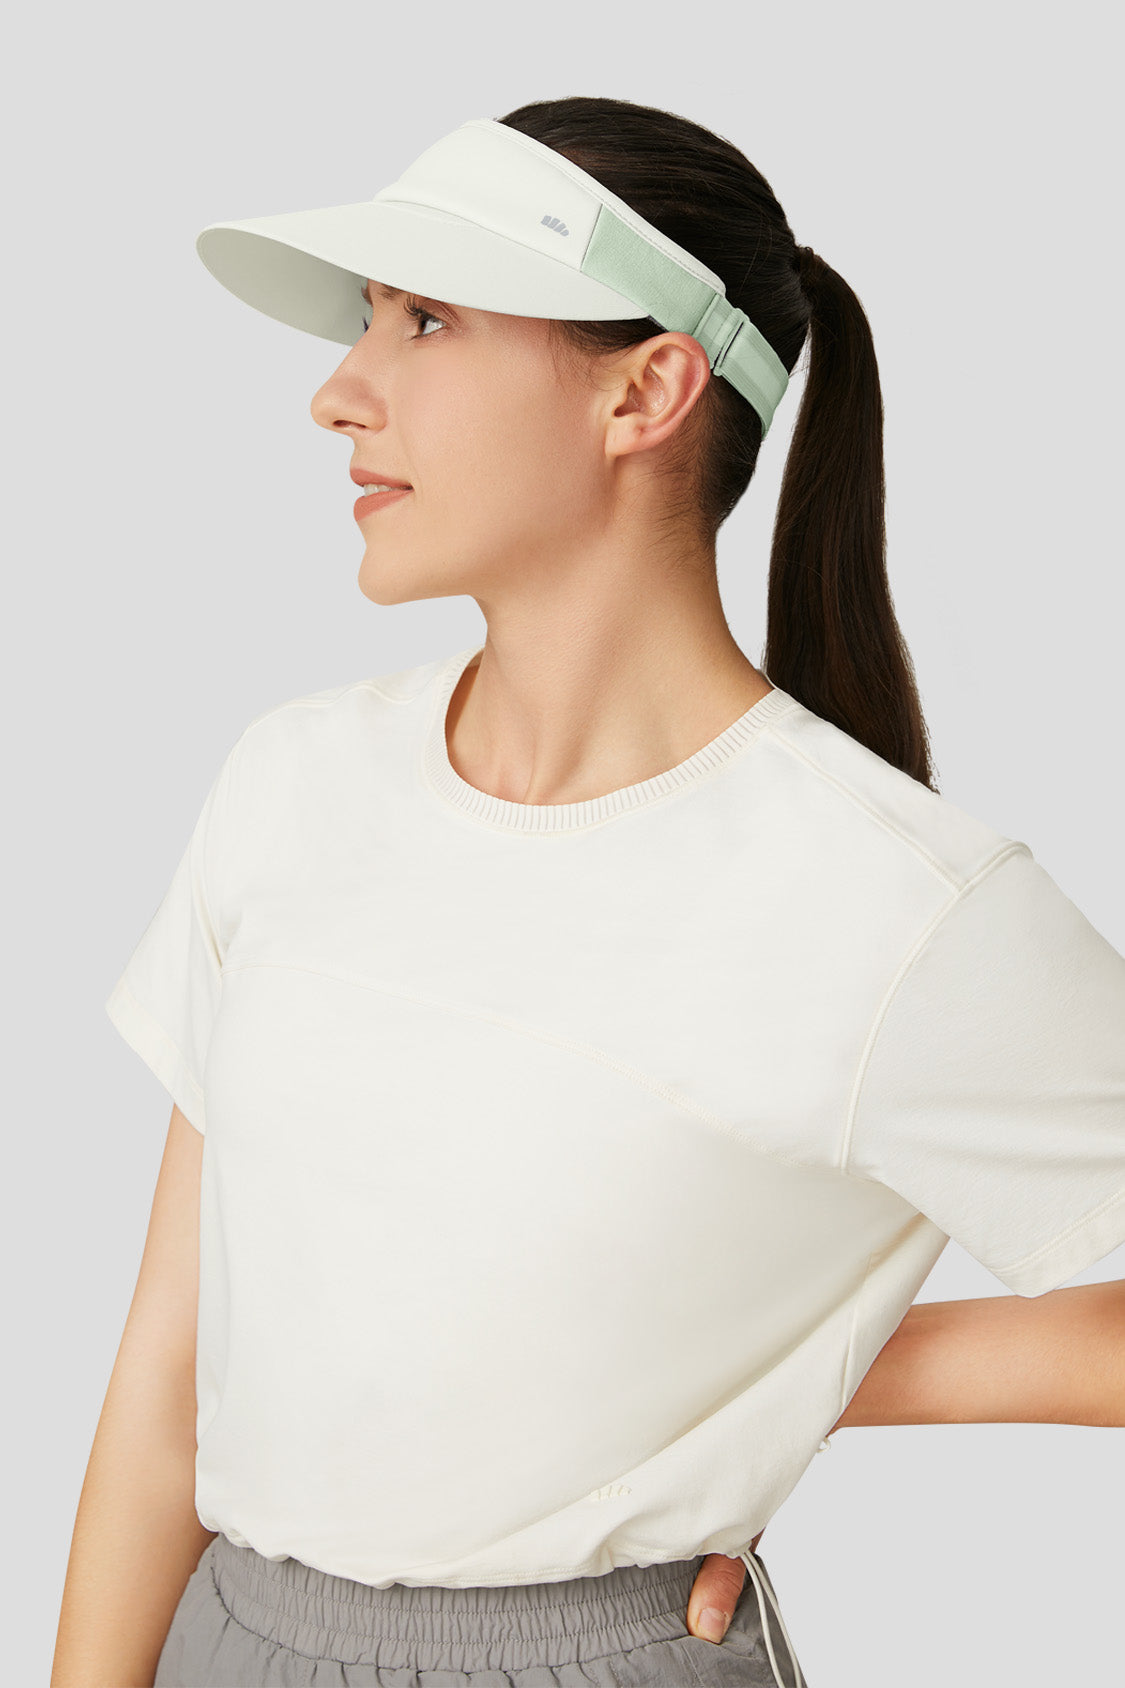 PanPacSight Men Women Sun Protection Sports Visor Hats Summer